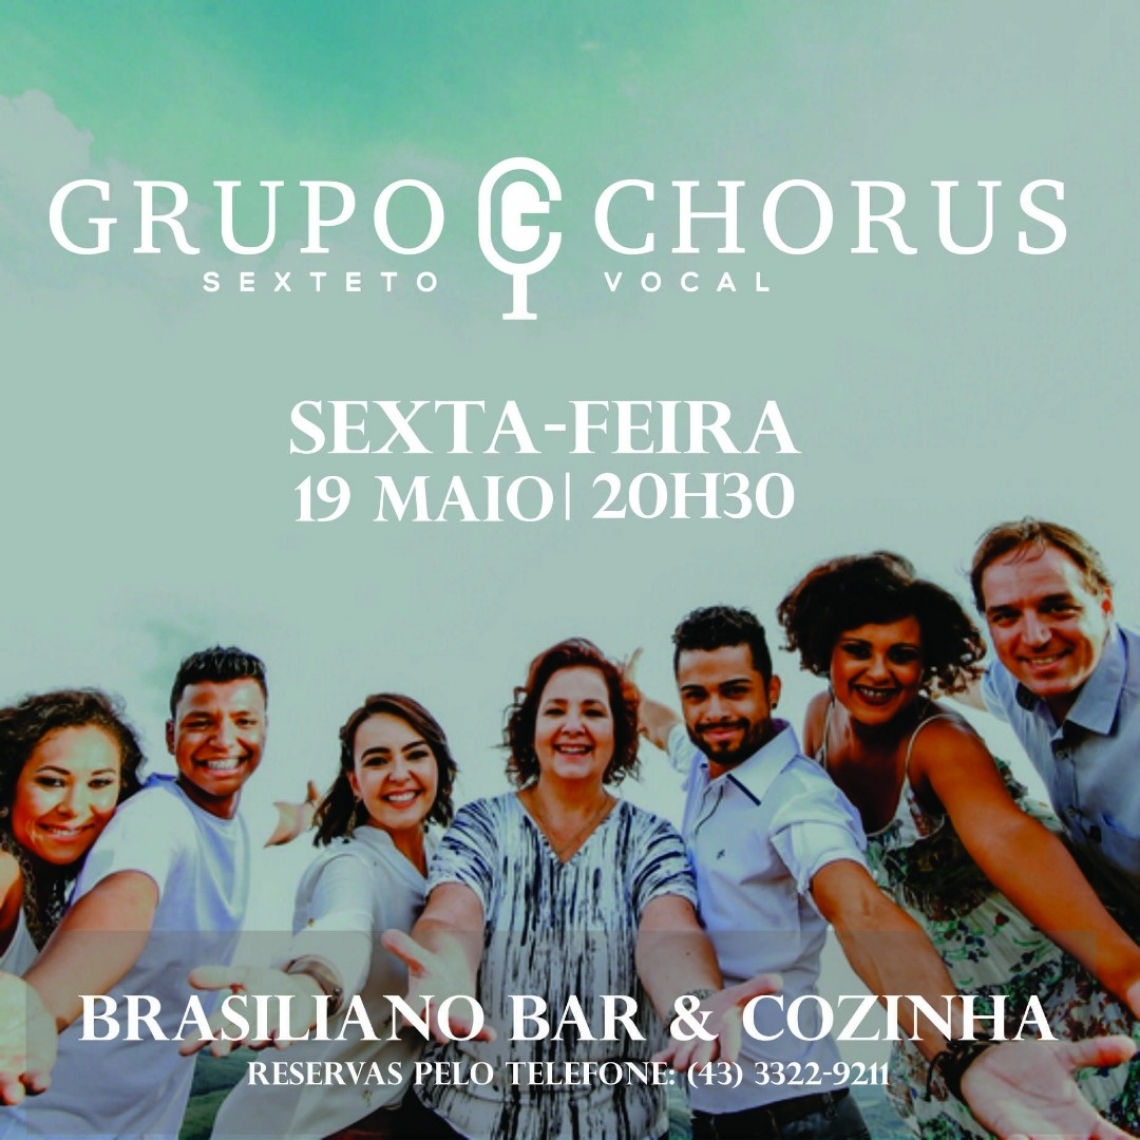 Sexta-feira vocal no Brasiliano